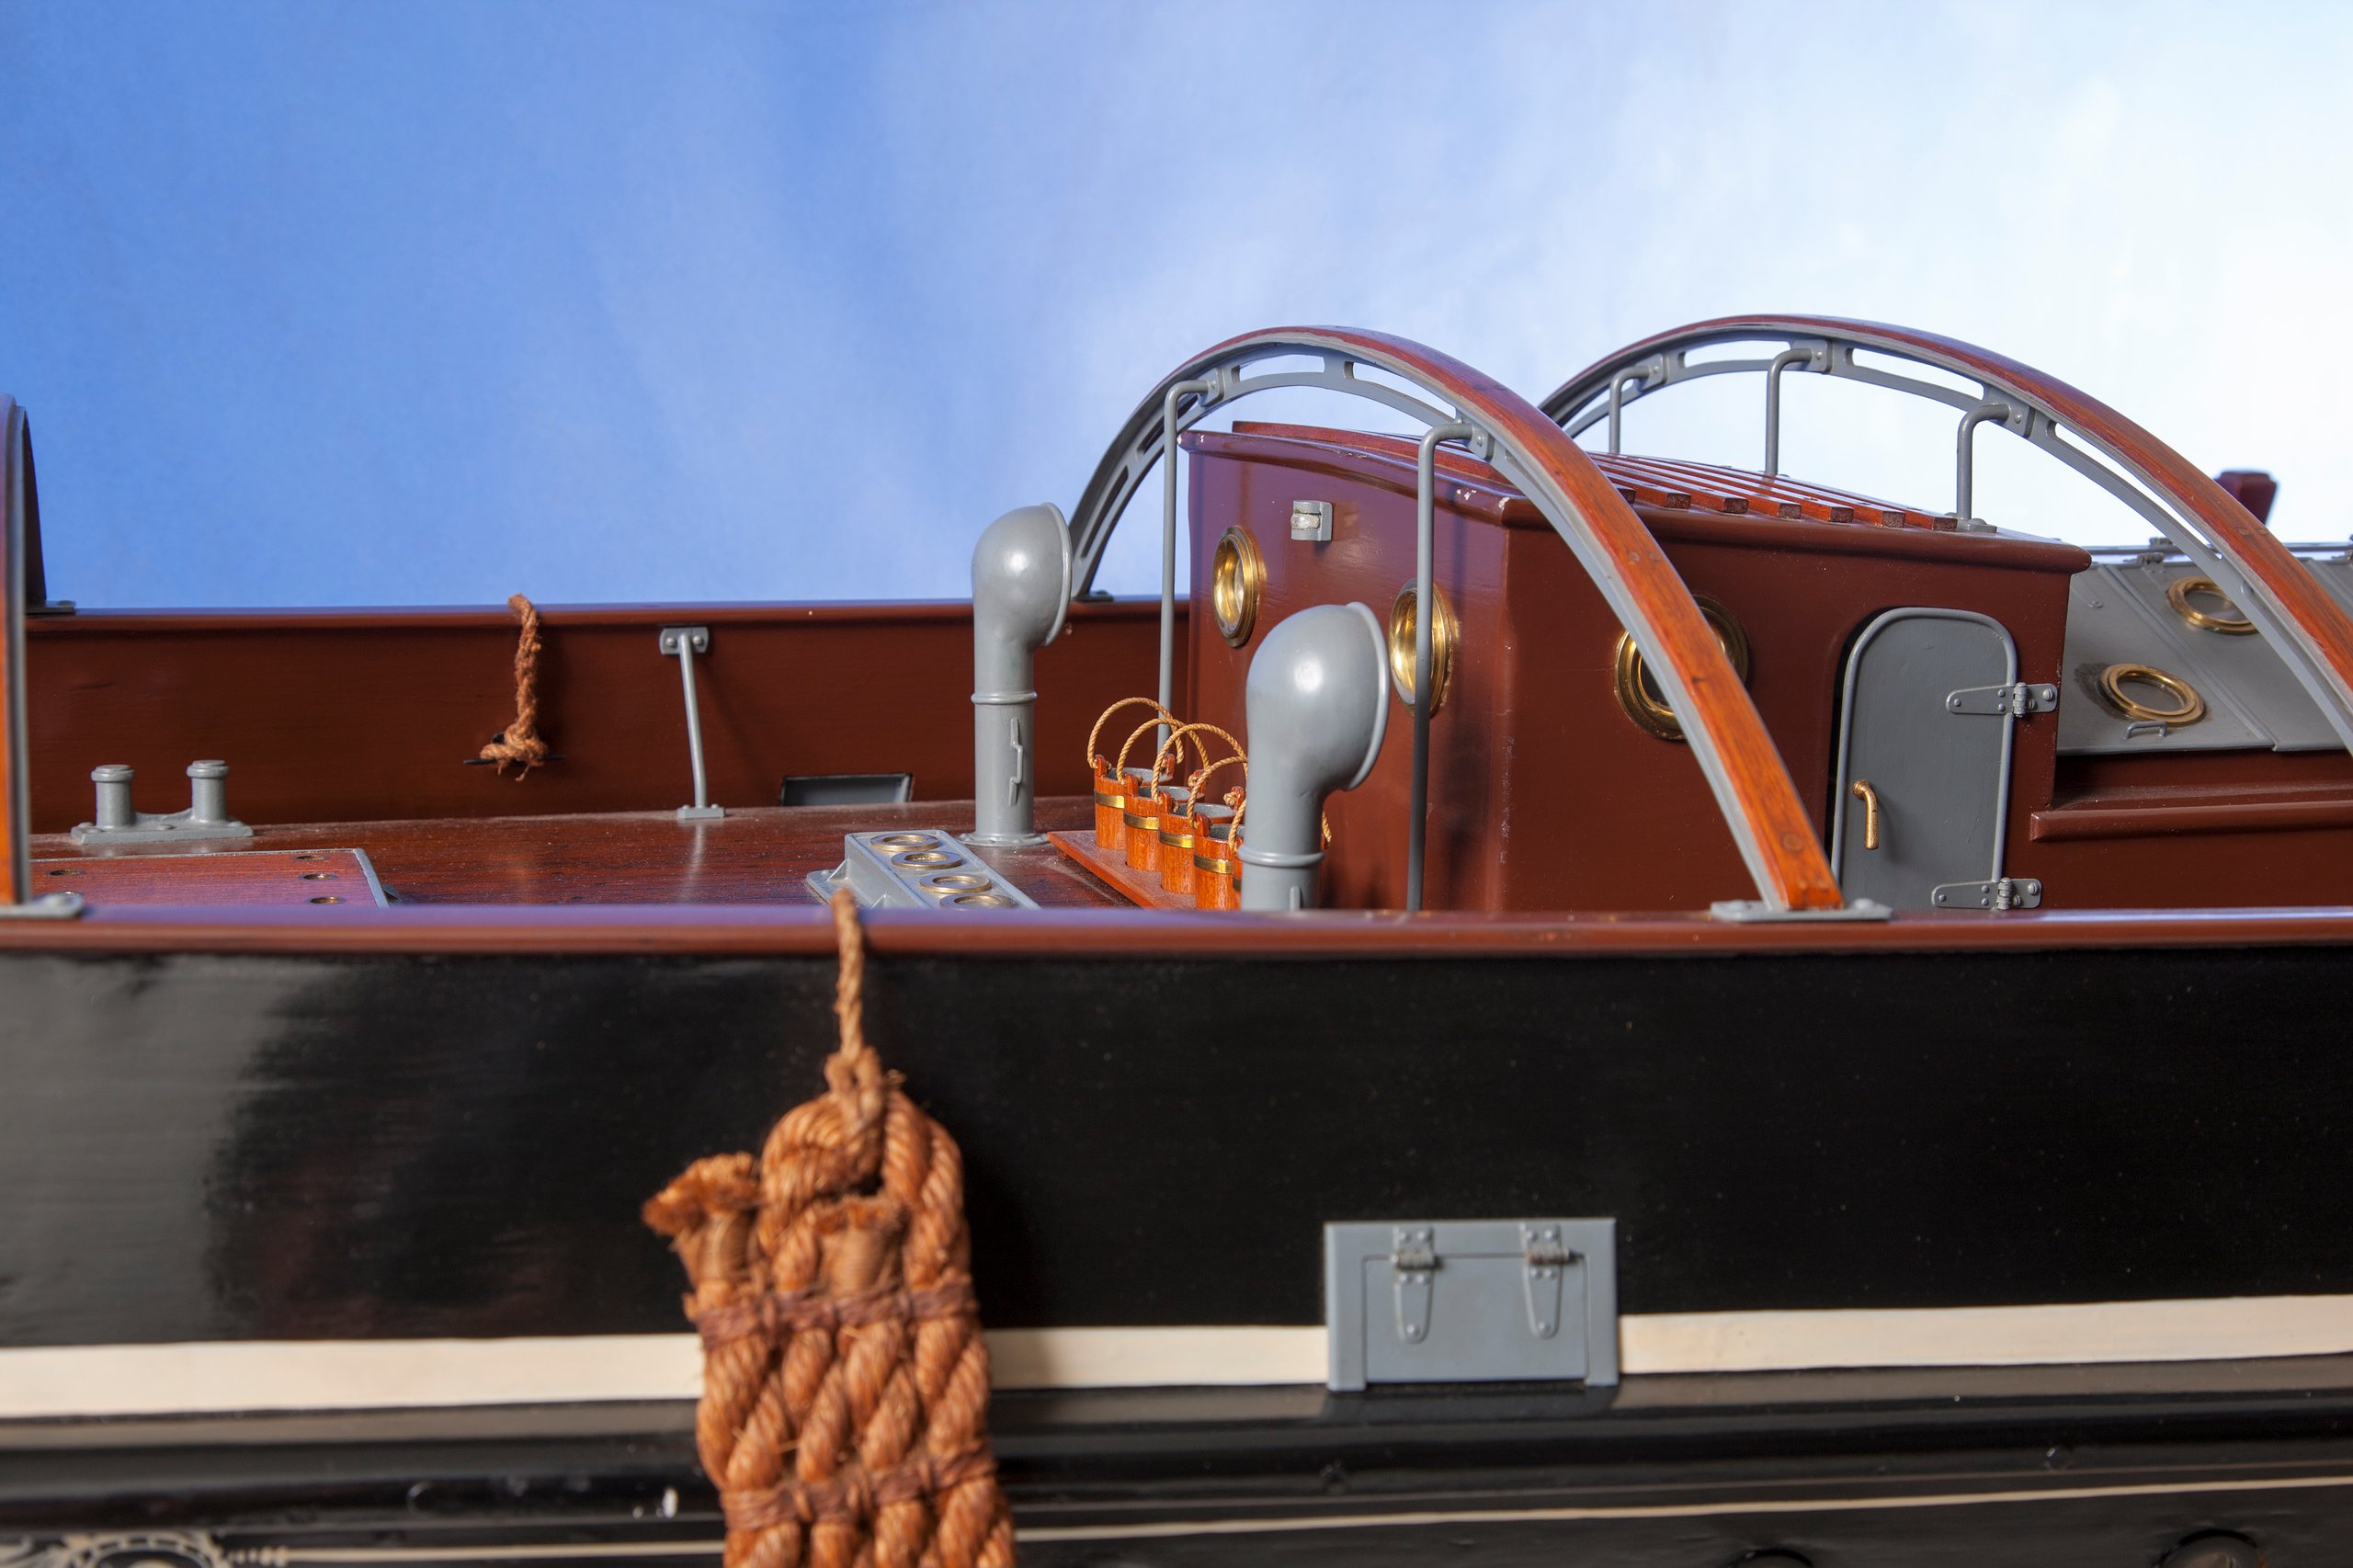 Model of New Zealand steam tug SS "Awarua" made by Harry F. Allen